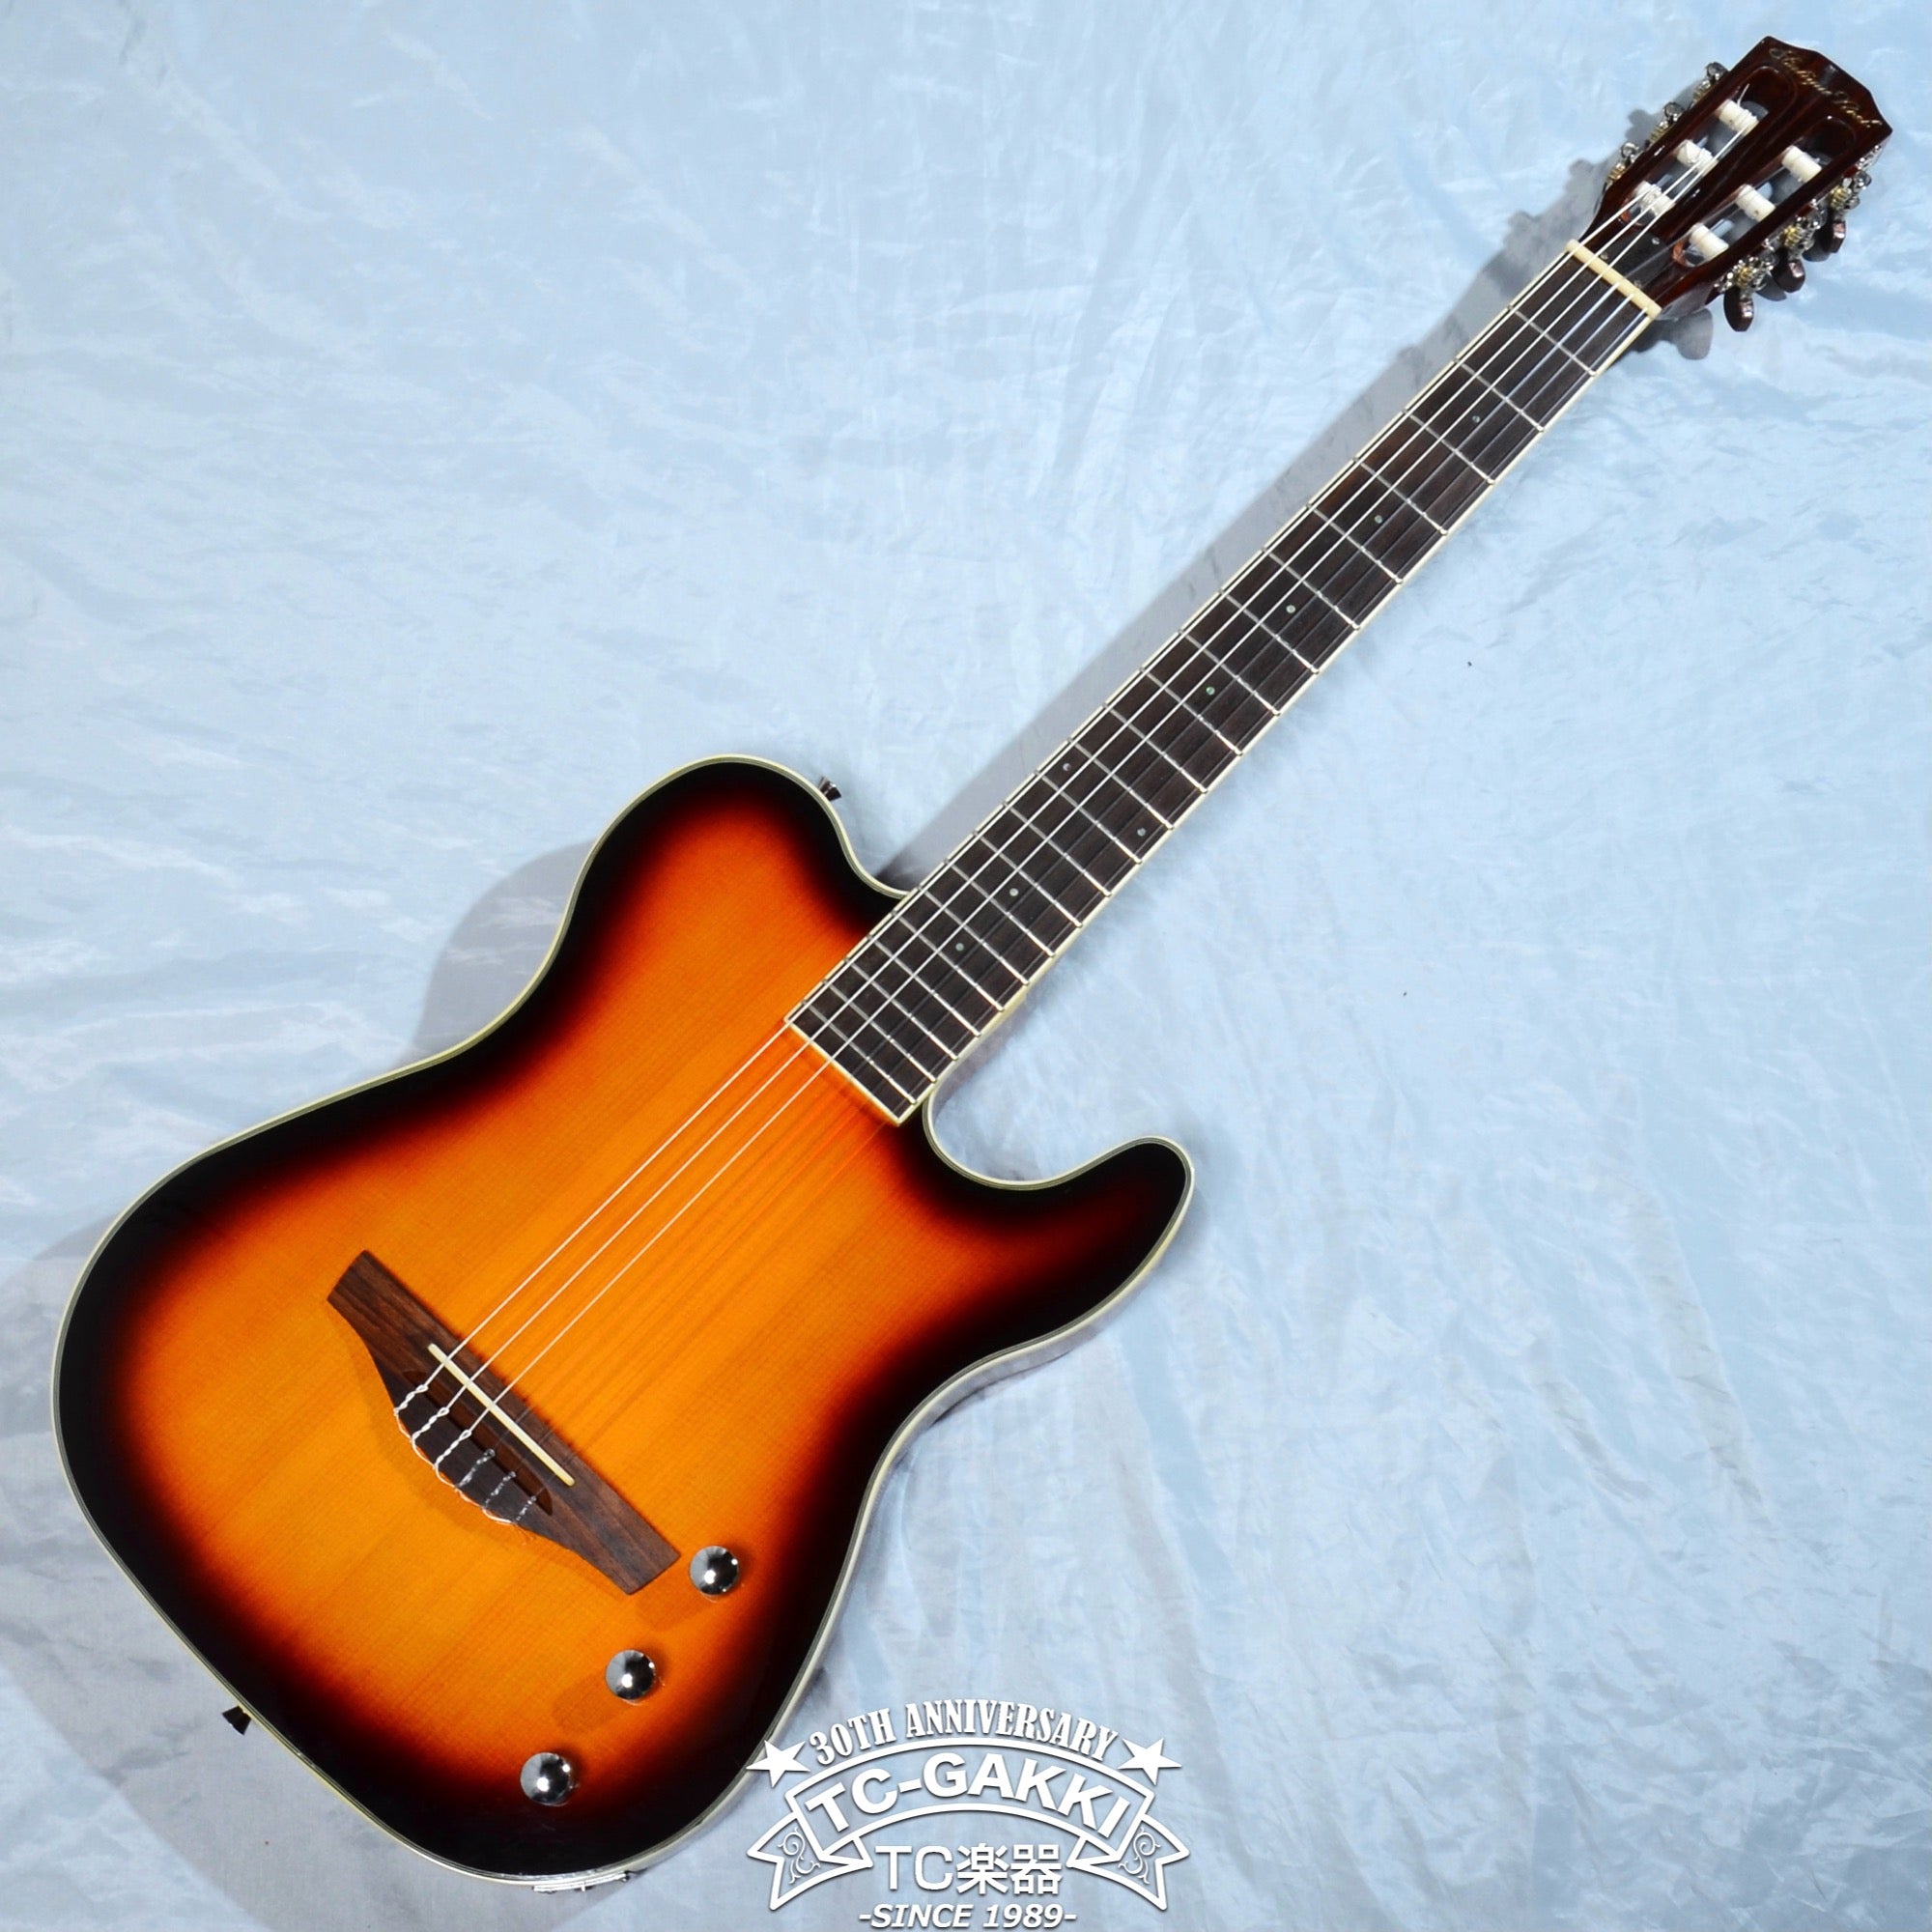 Antique Noel AS 520N 2010 0 Guitar For Sale TCGAKKI